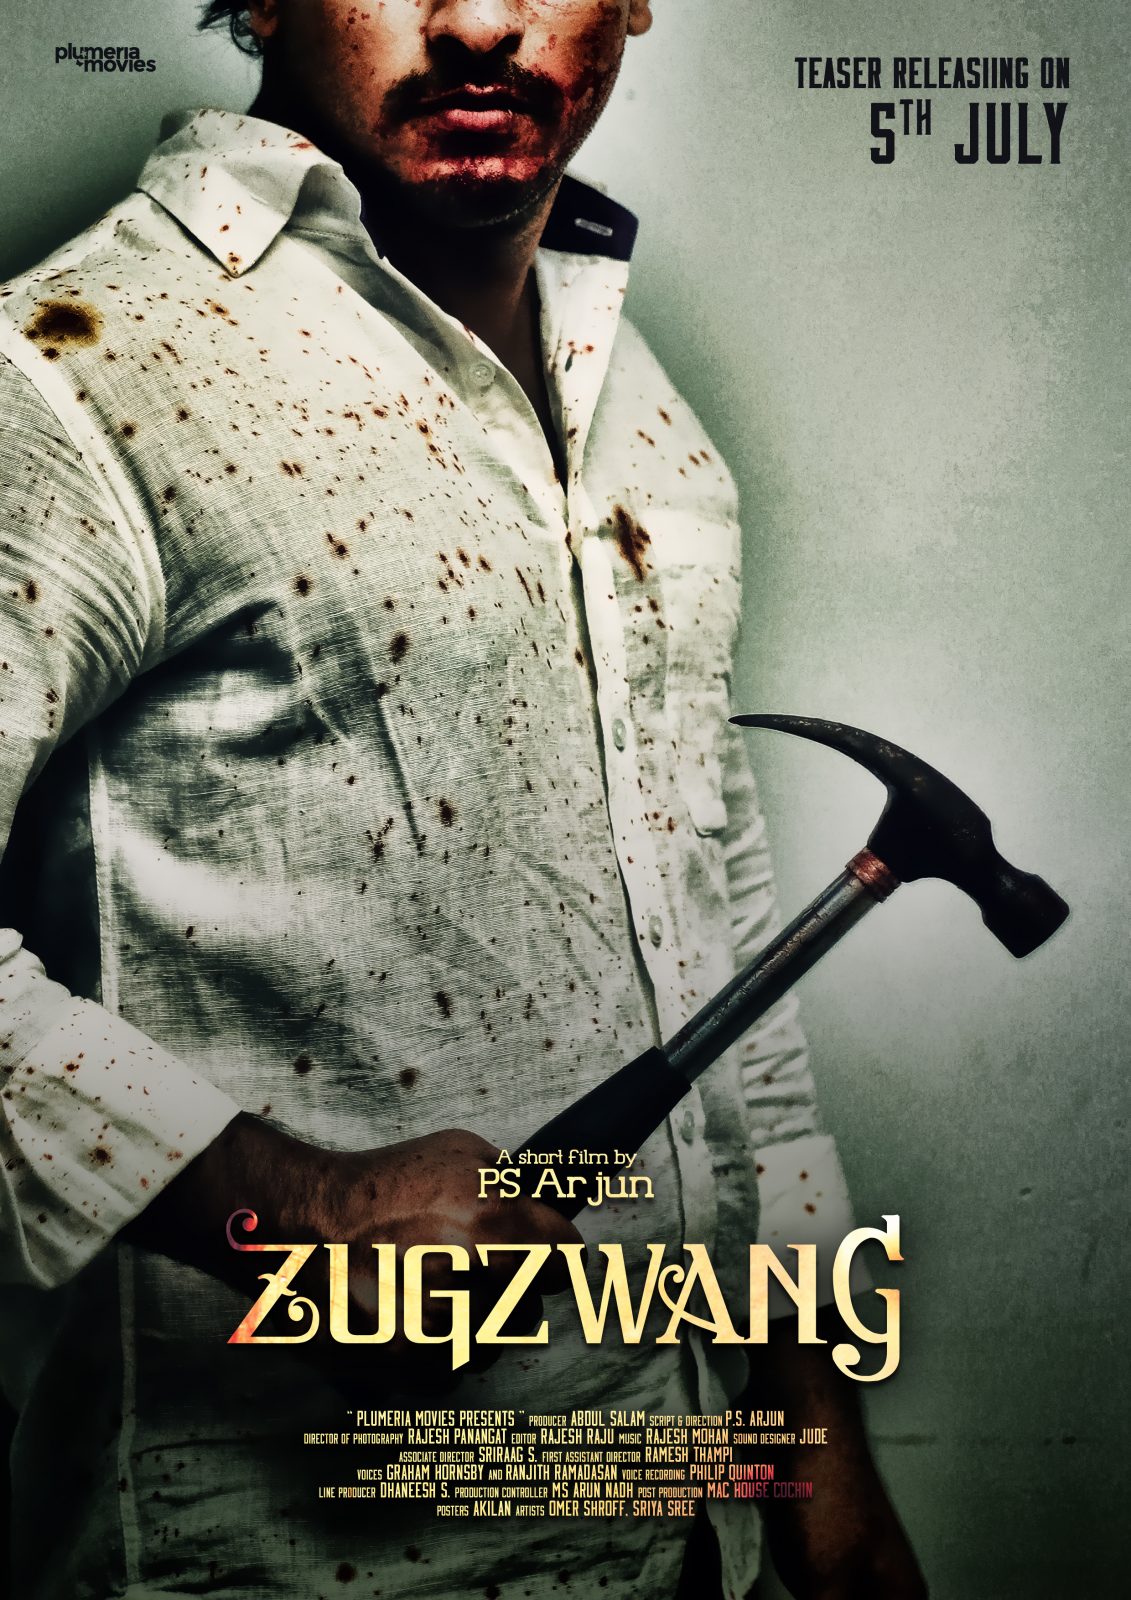 Zugzwang Poster PS Arjun, Sriya Sree Short Film